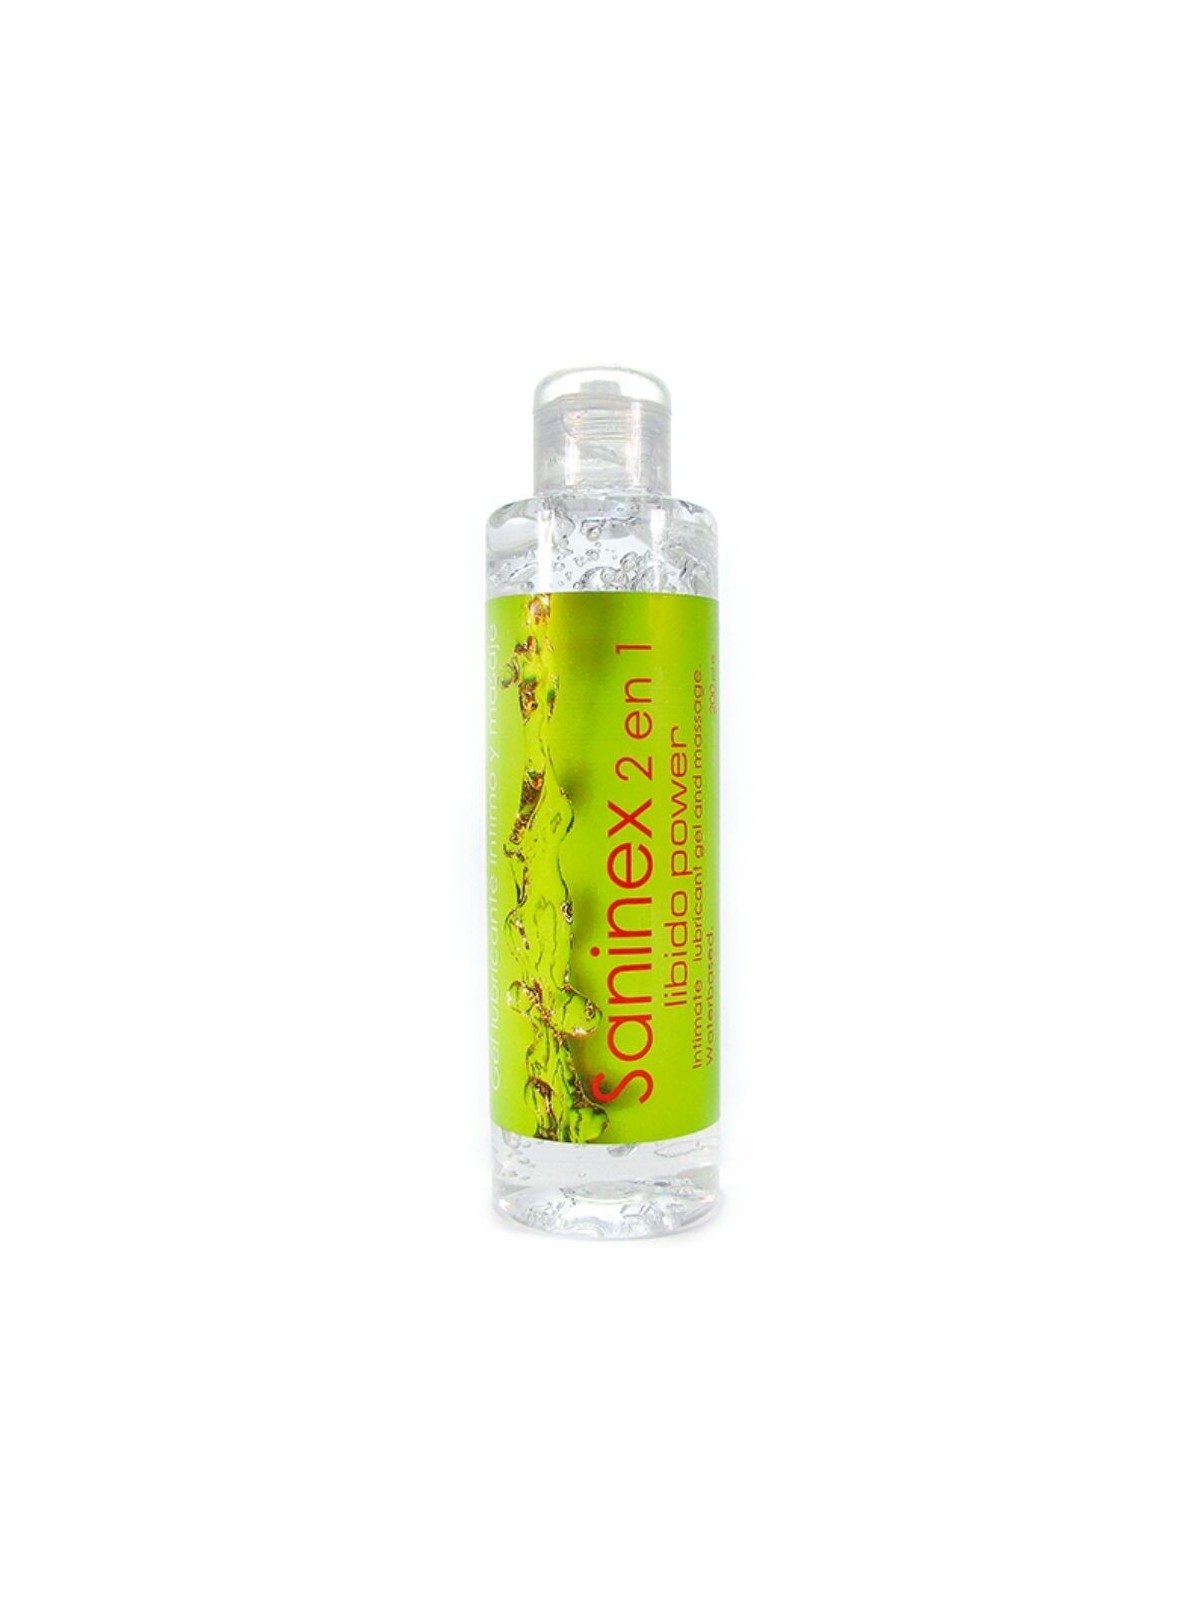 Saninex Lubricante 2 En 1 Aumento Libido 200 ml - Comprar Crema masaje sexual Saninex - Lubricantes base agua (1)